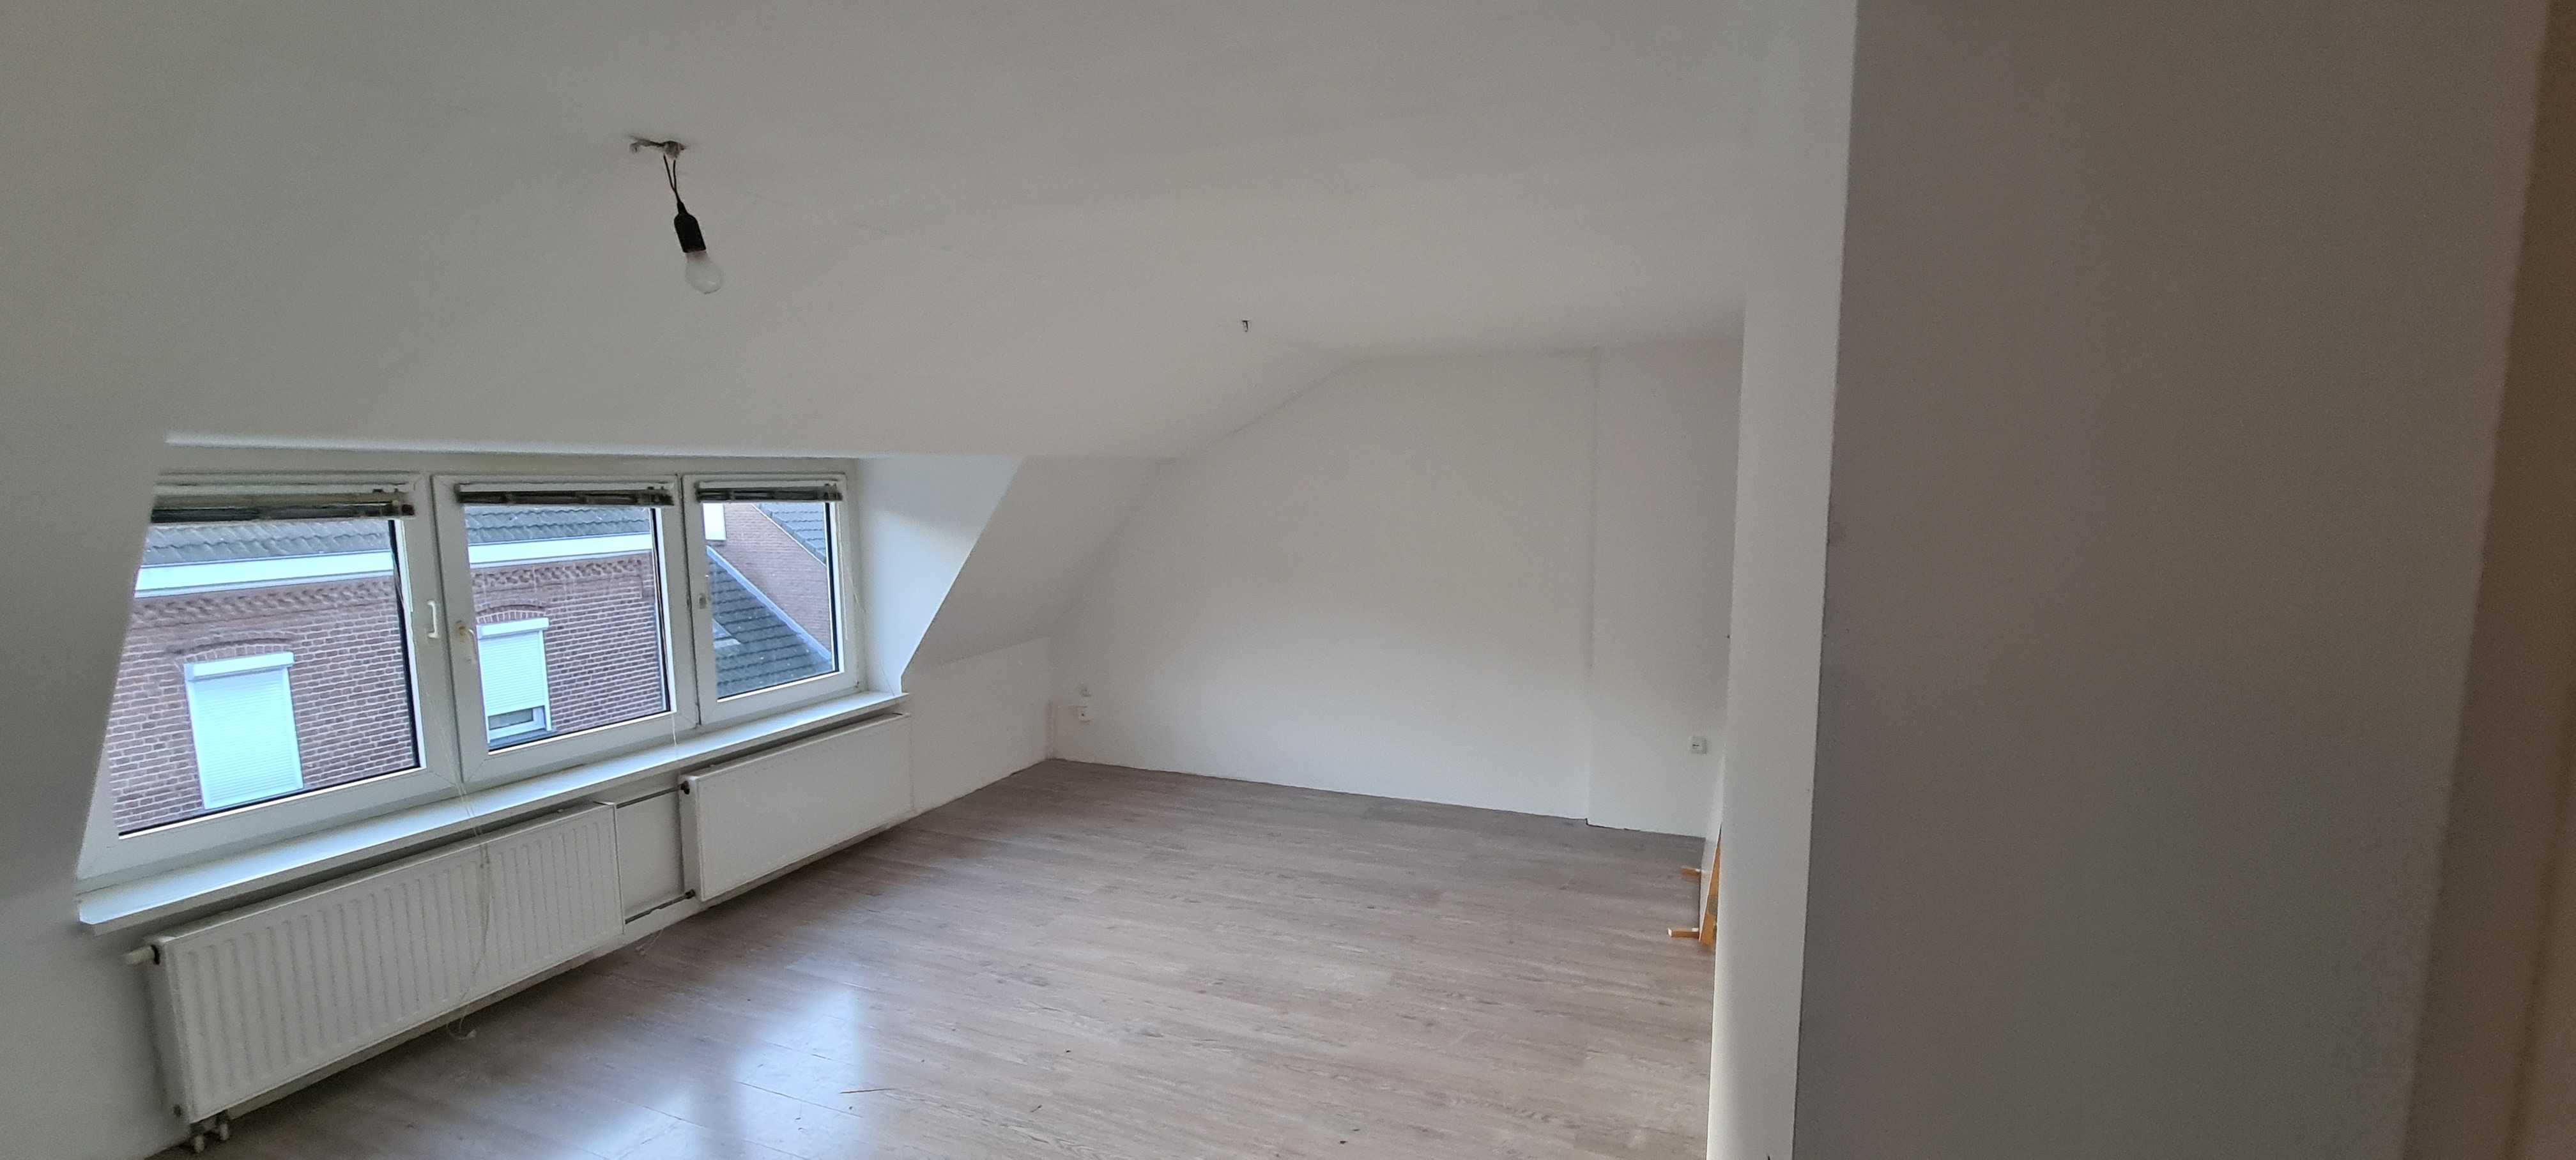 Woning / appartement - Kerkrade - Slakstraat 19 , 19A & 19B